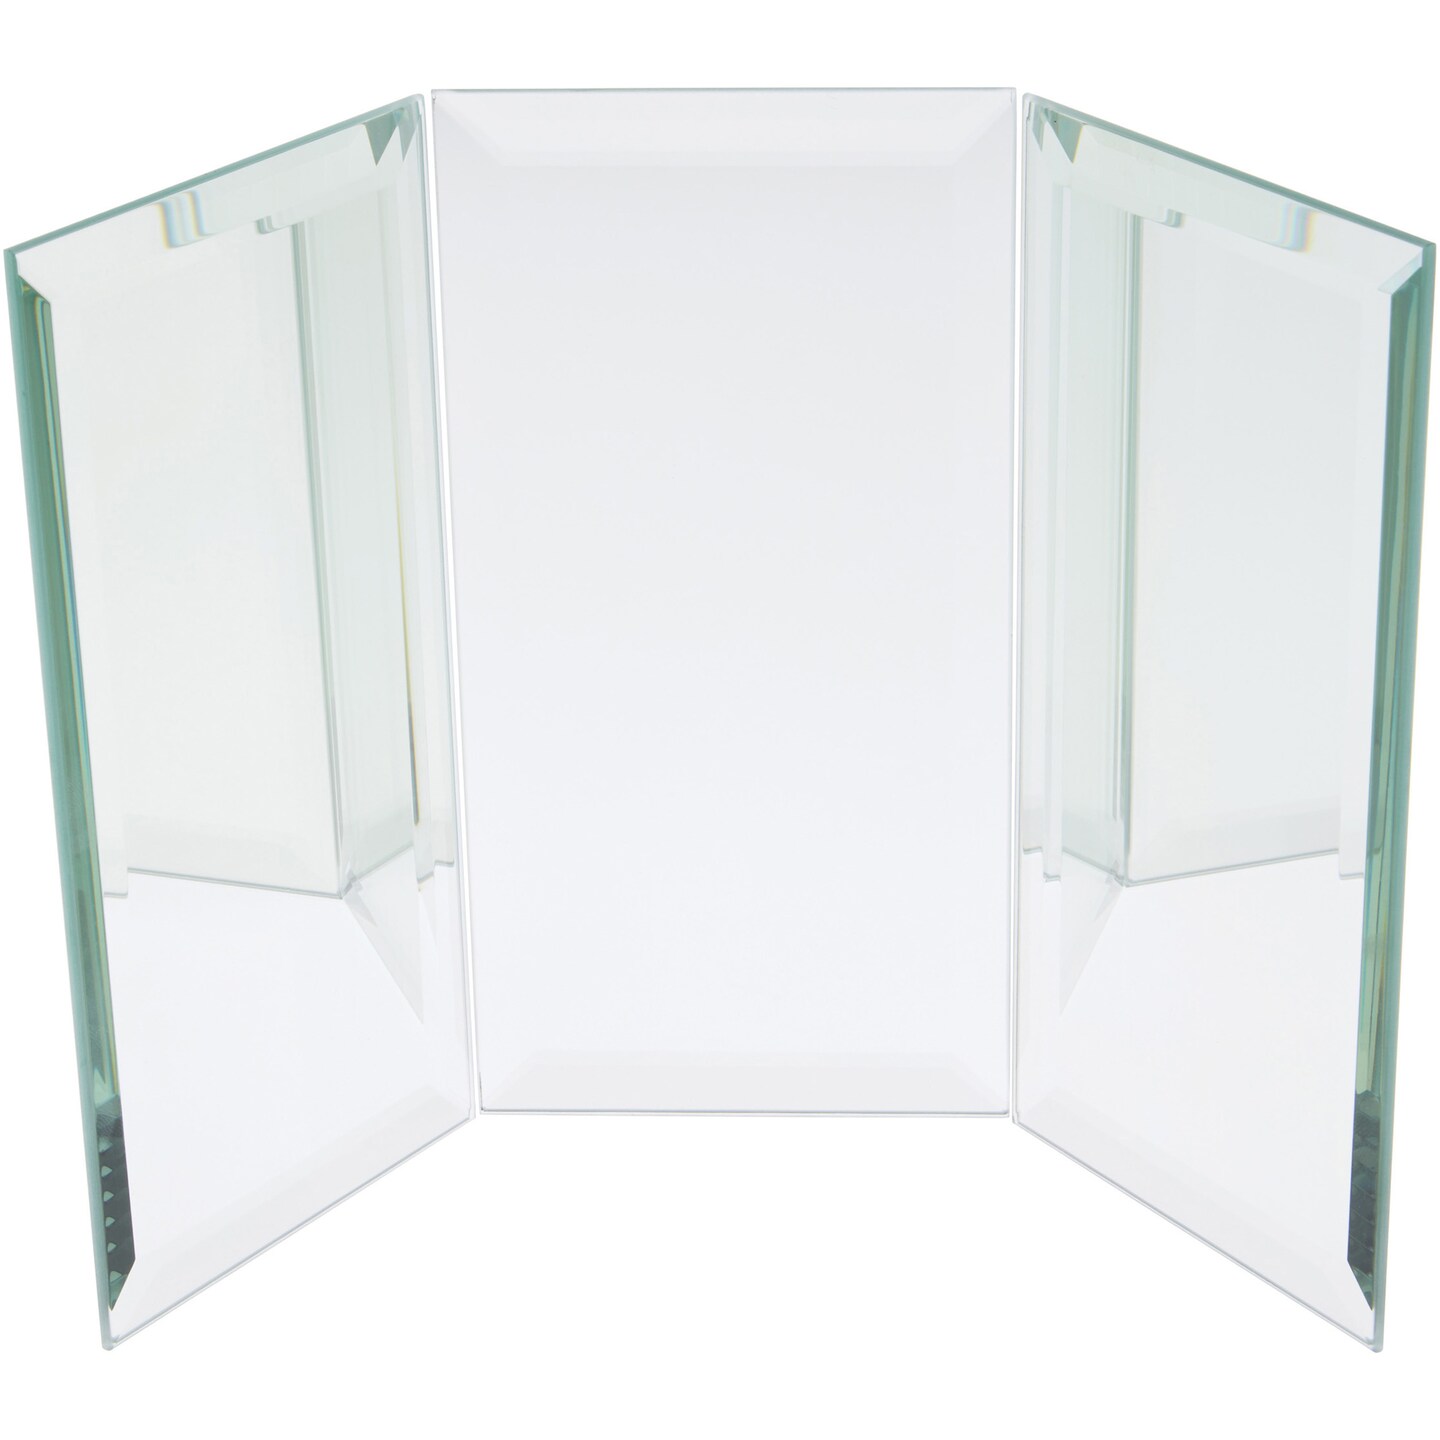 Plymor Rectangular 5mm Beveled Glass Mirror Backdrop, 8 inch